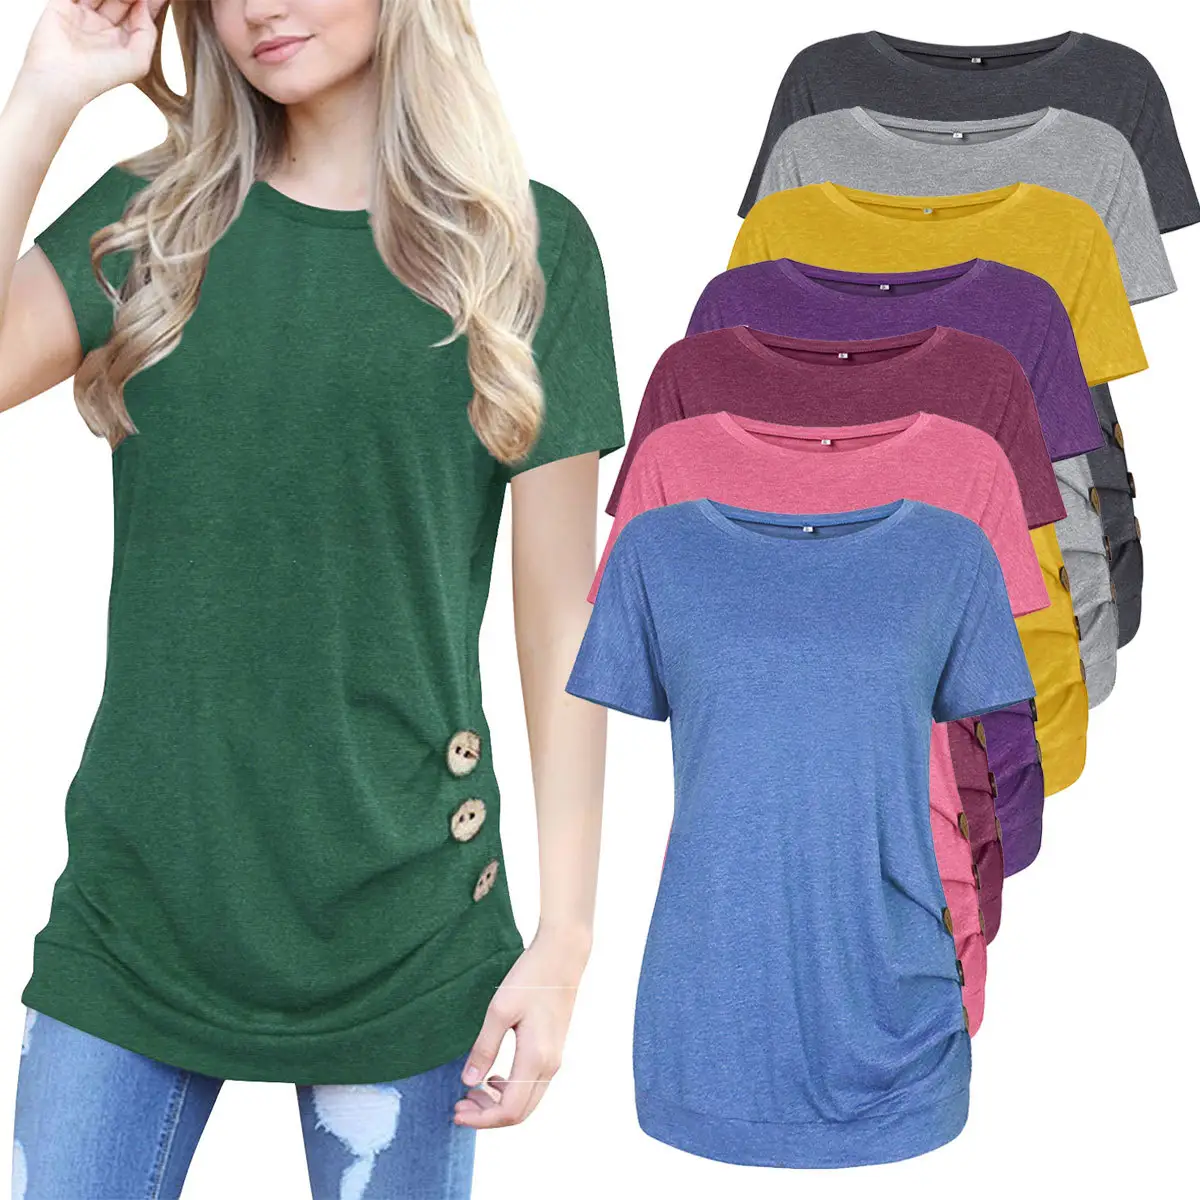 FZ-85 Amazon Women's Supply Button Decoration Short-Sleeved Pullover Dressy Shirt Girls Summer Tops Long Blouse